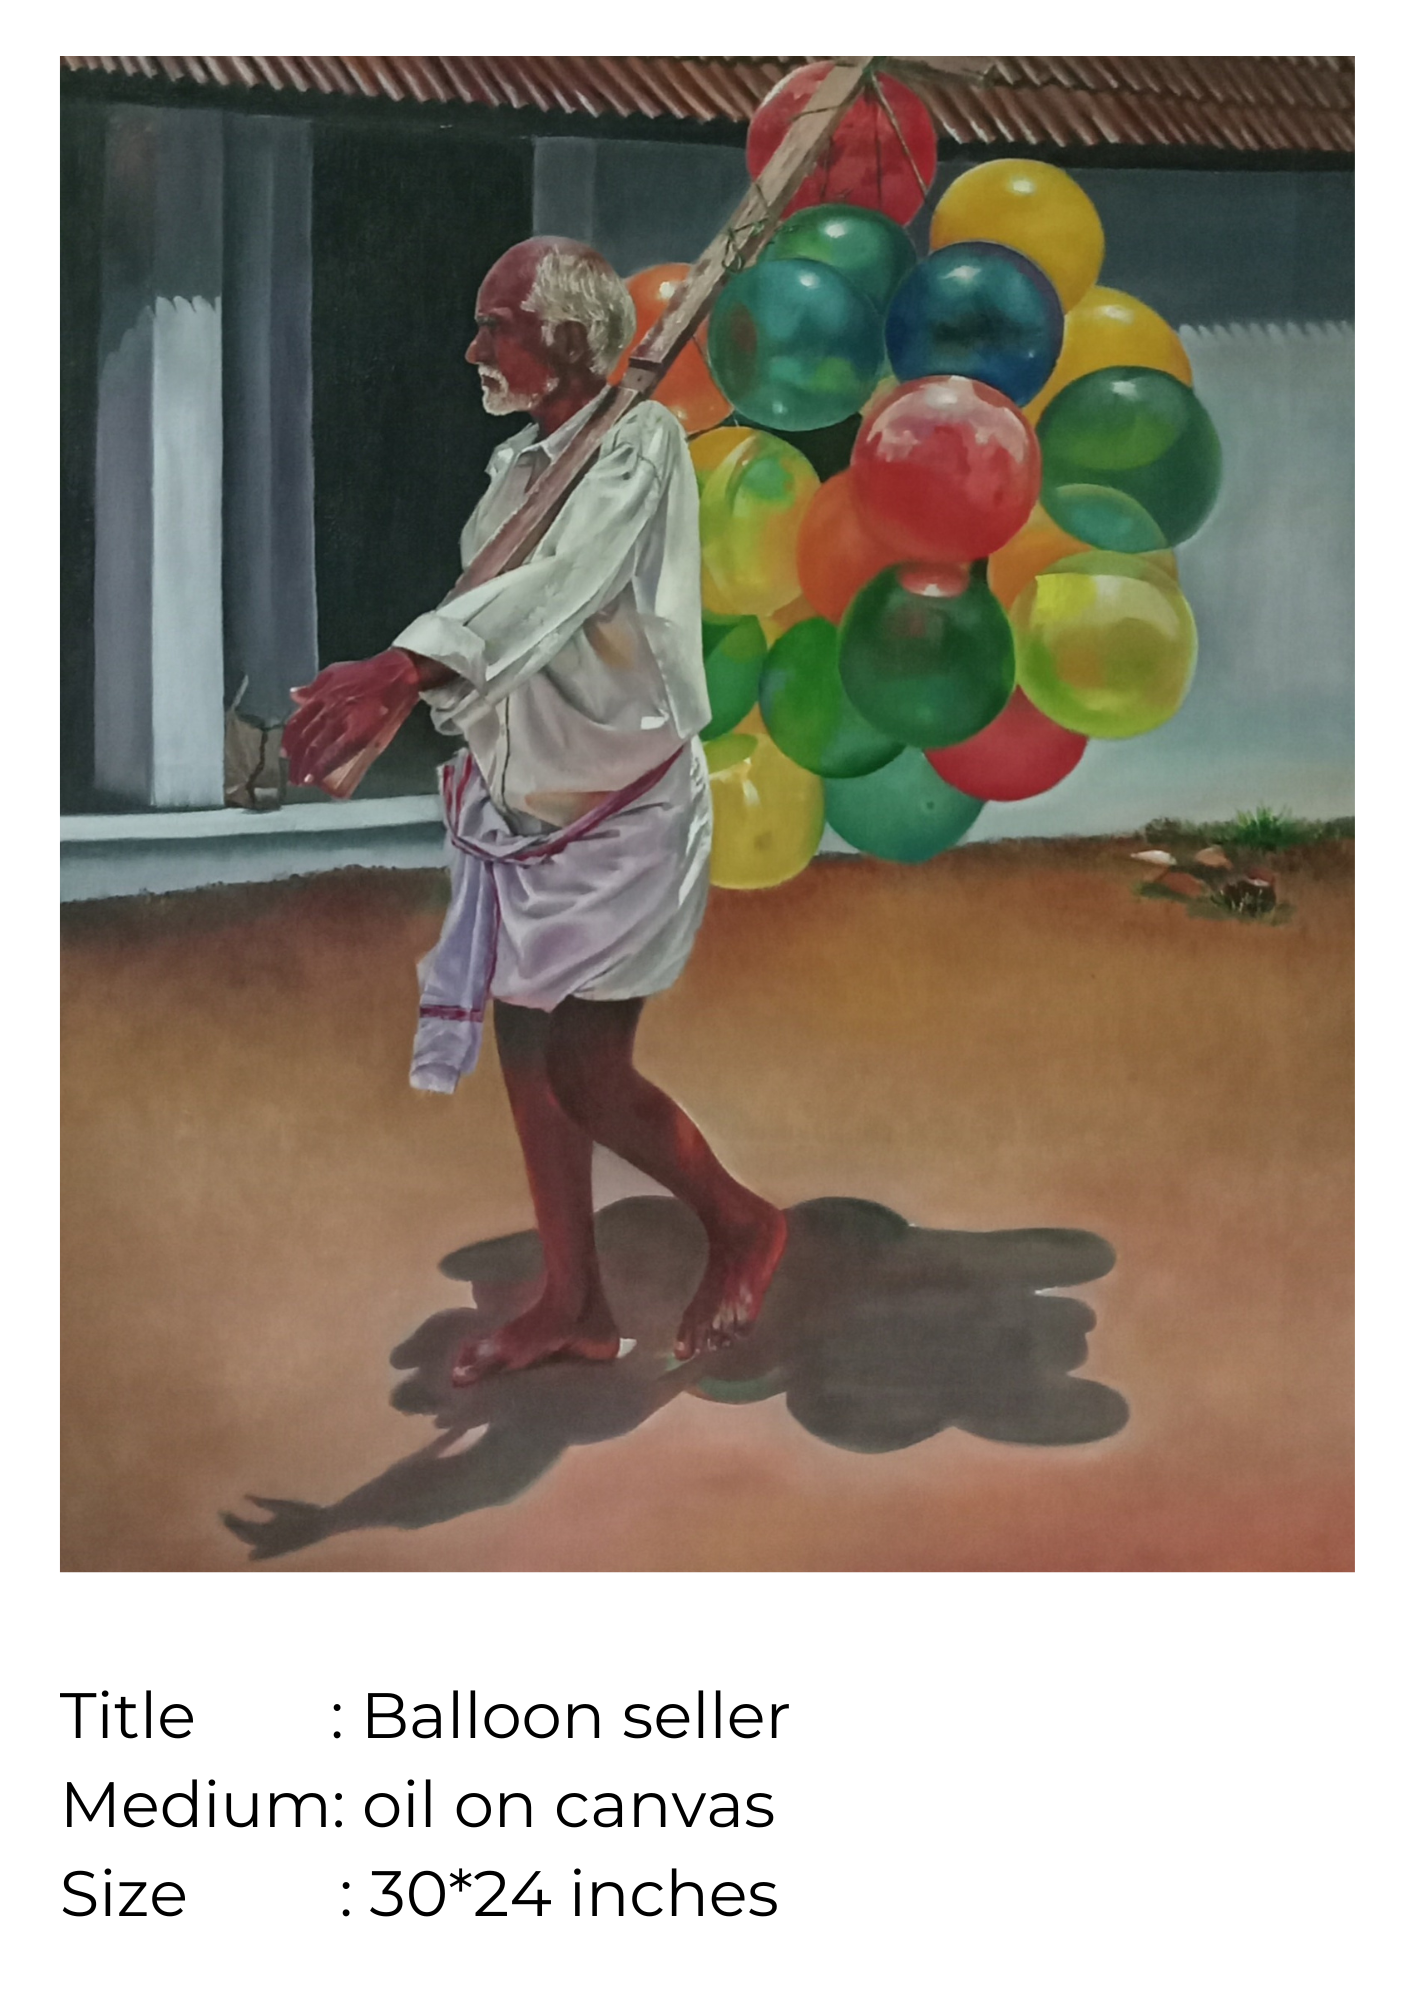 Title : Balloon seller
Medium: oil on canvas
Size : 3024 inches